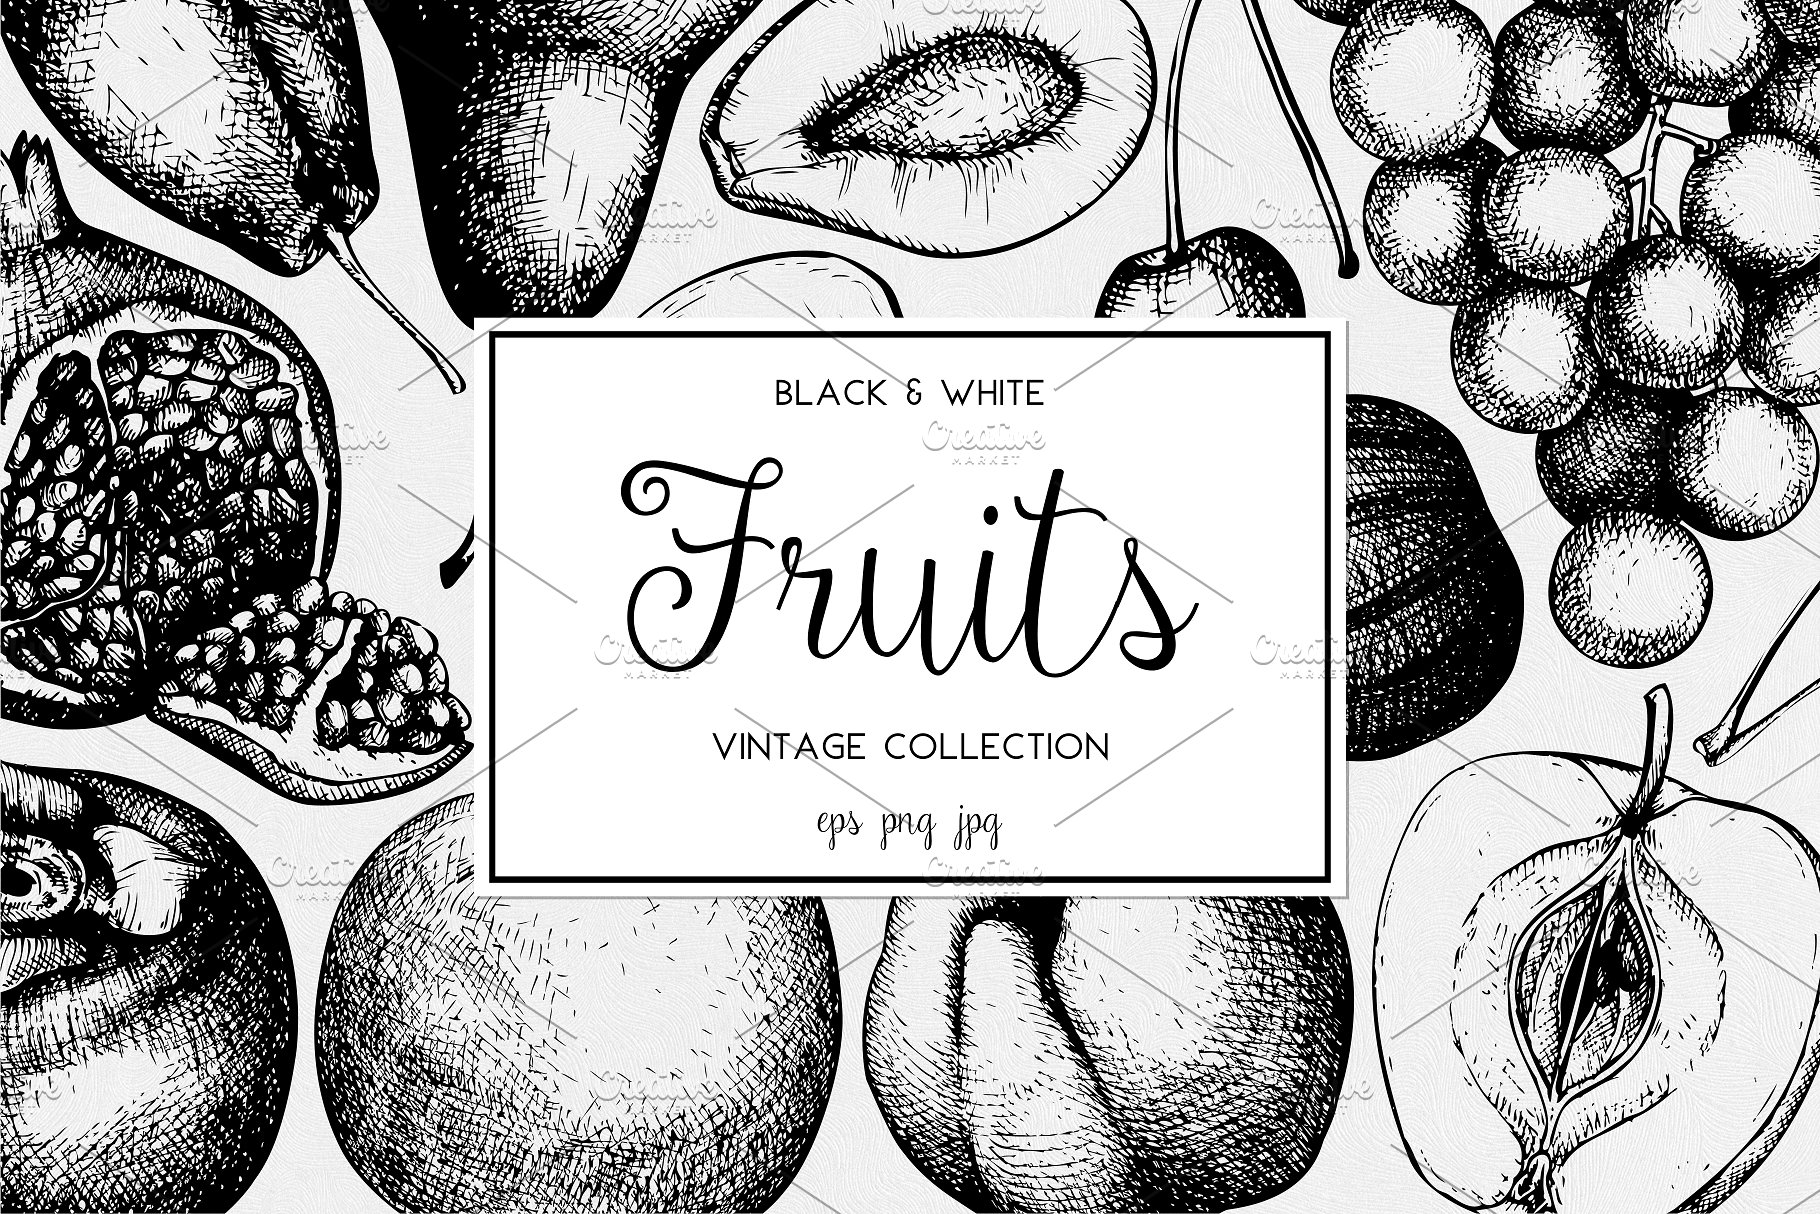 墨水手绘水果素材合集 Ink hand drawn fruit collection插图